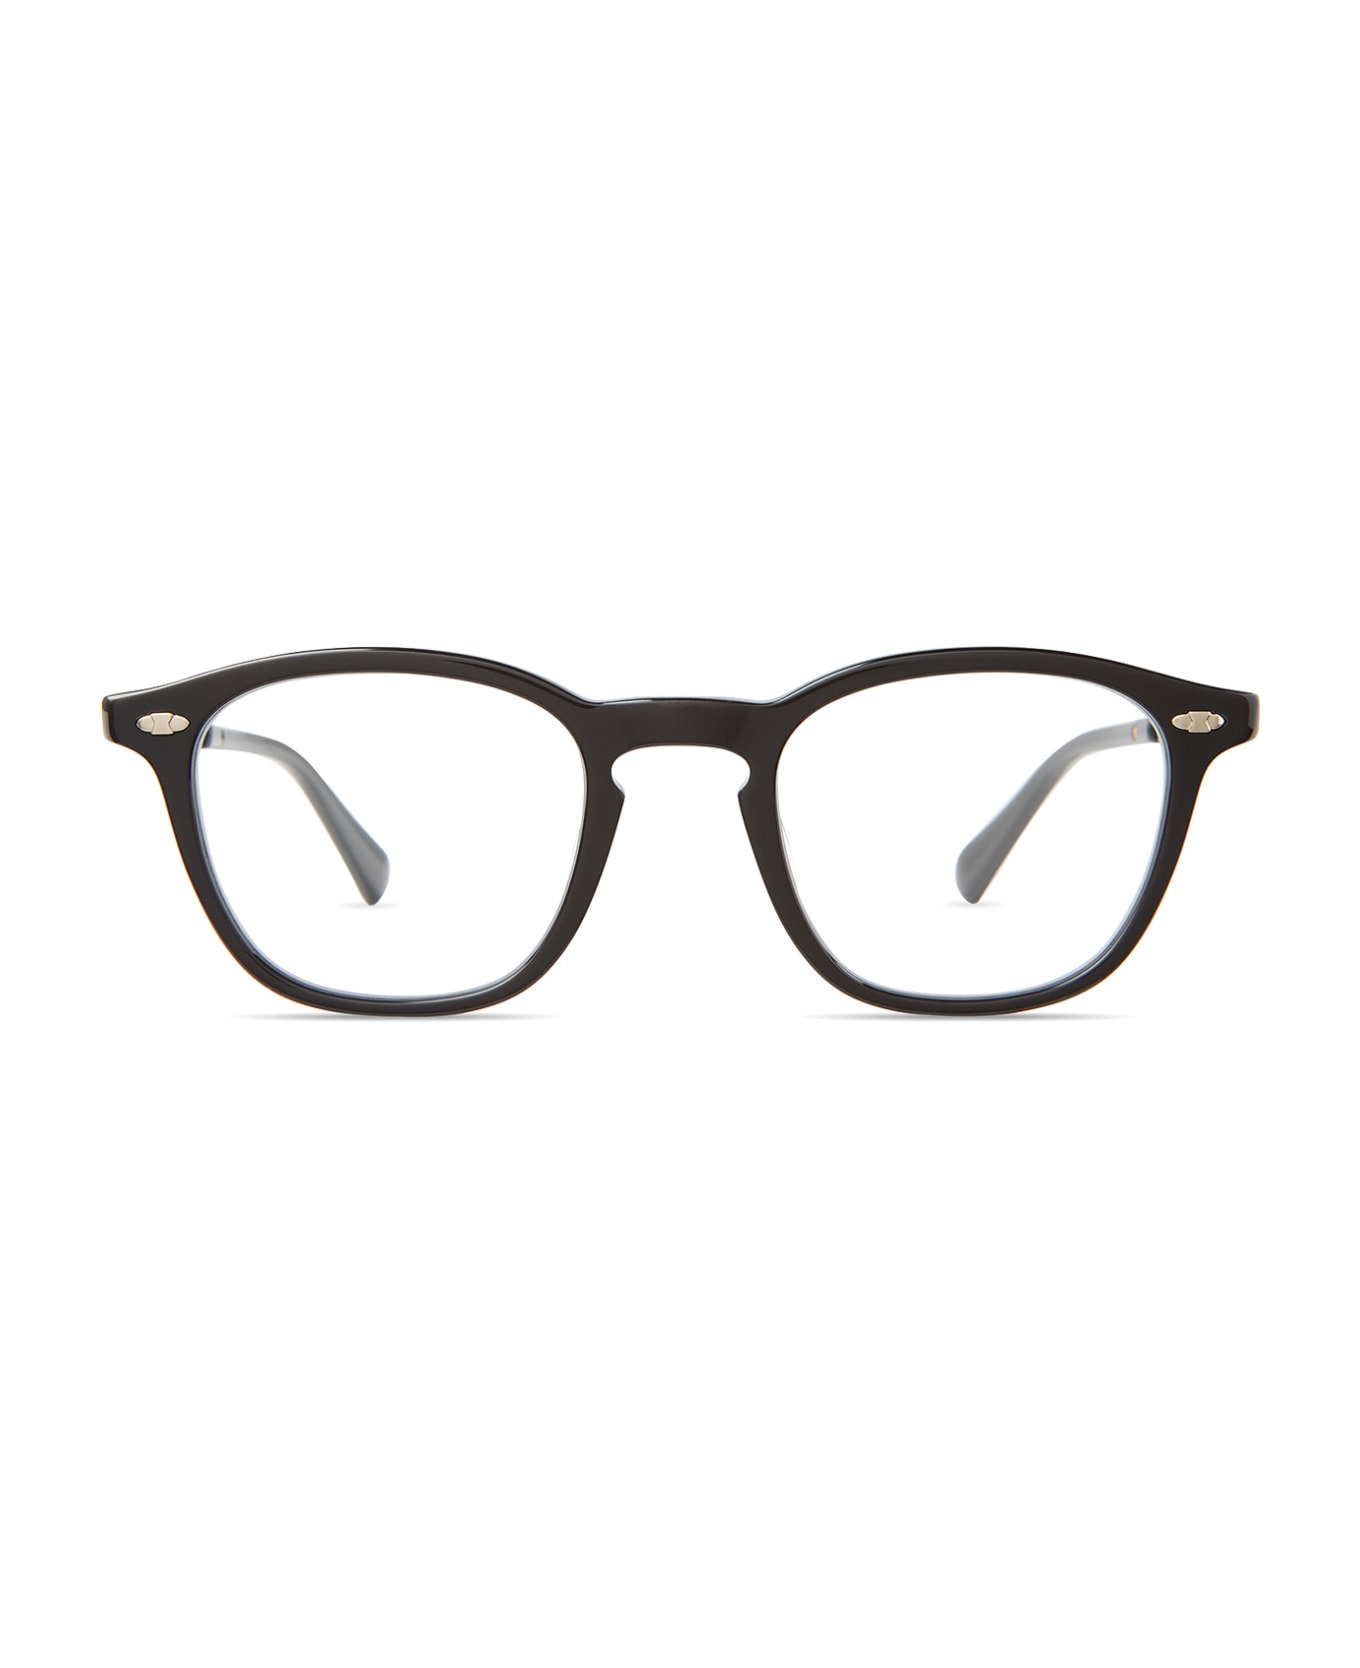 Mr. Leight Devon C Black-gunmetal Glasses - Black-Gunmetal